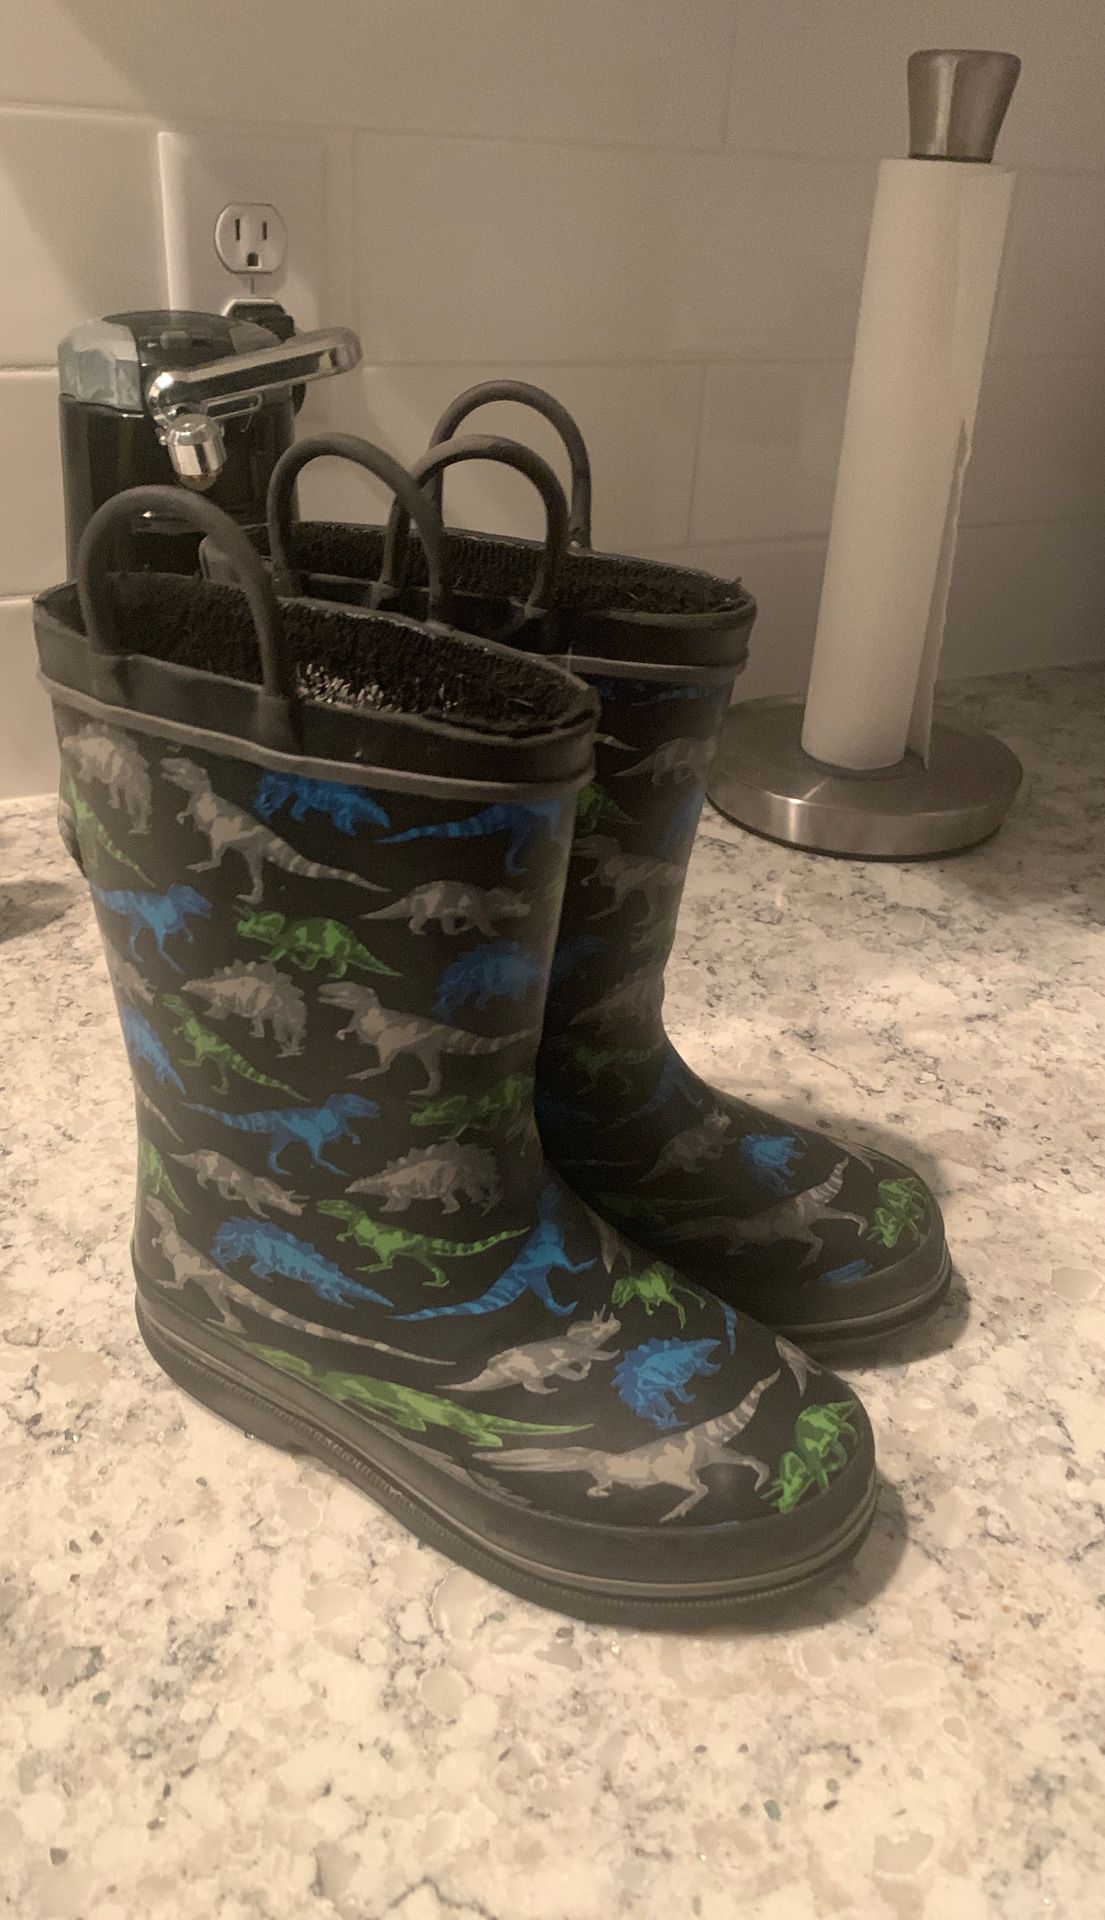 Dinosaur rain boots